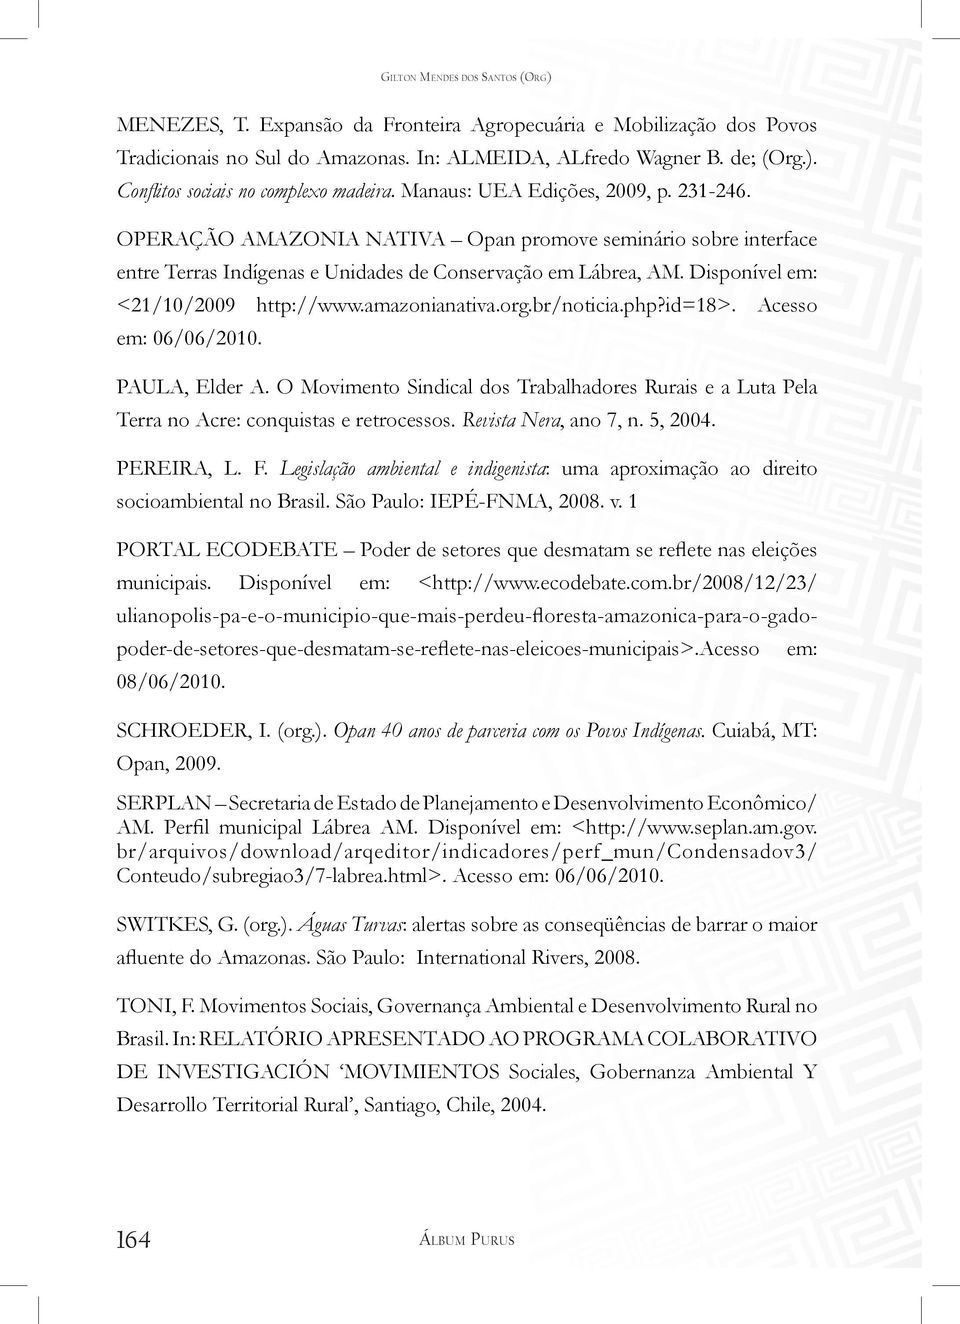 Disponível em: <21/10/2009 http://www.amazonianativa.org.br/noticia.php?id=18>. Acesso em: 06/06/2010. PAULA, Elder A.